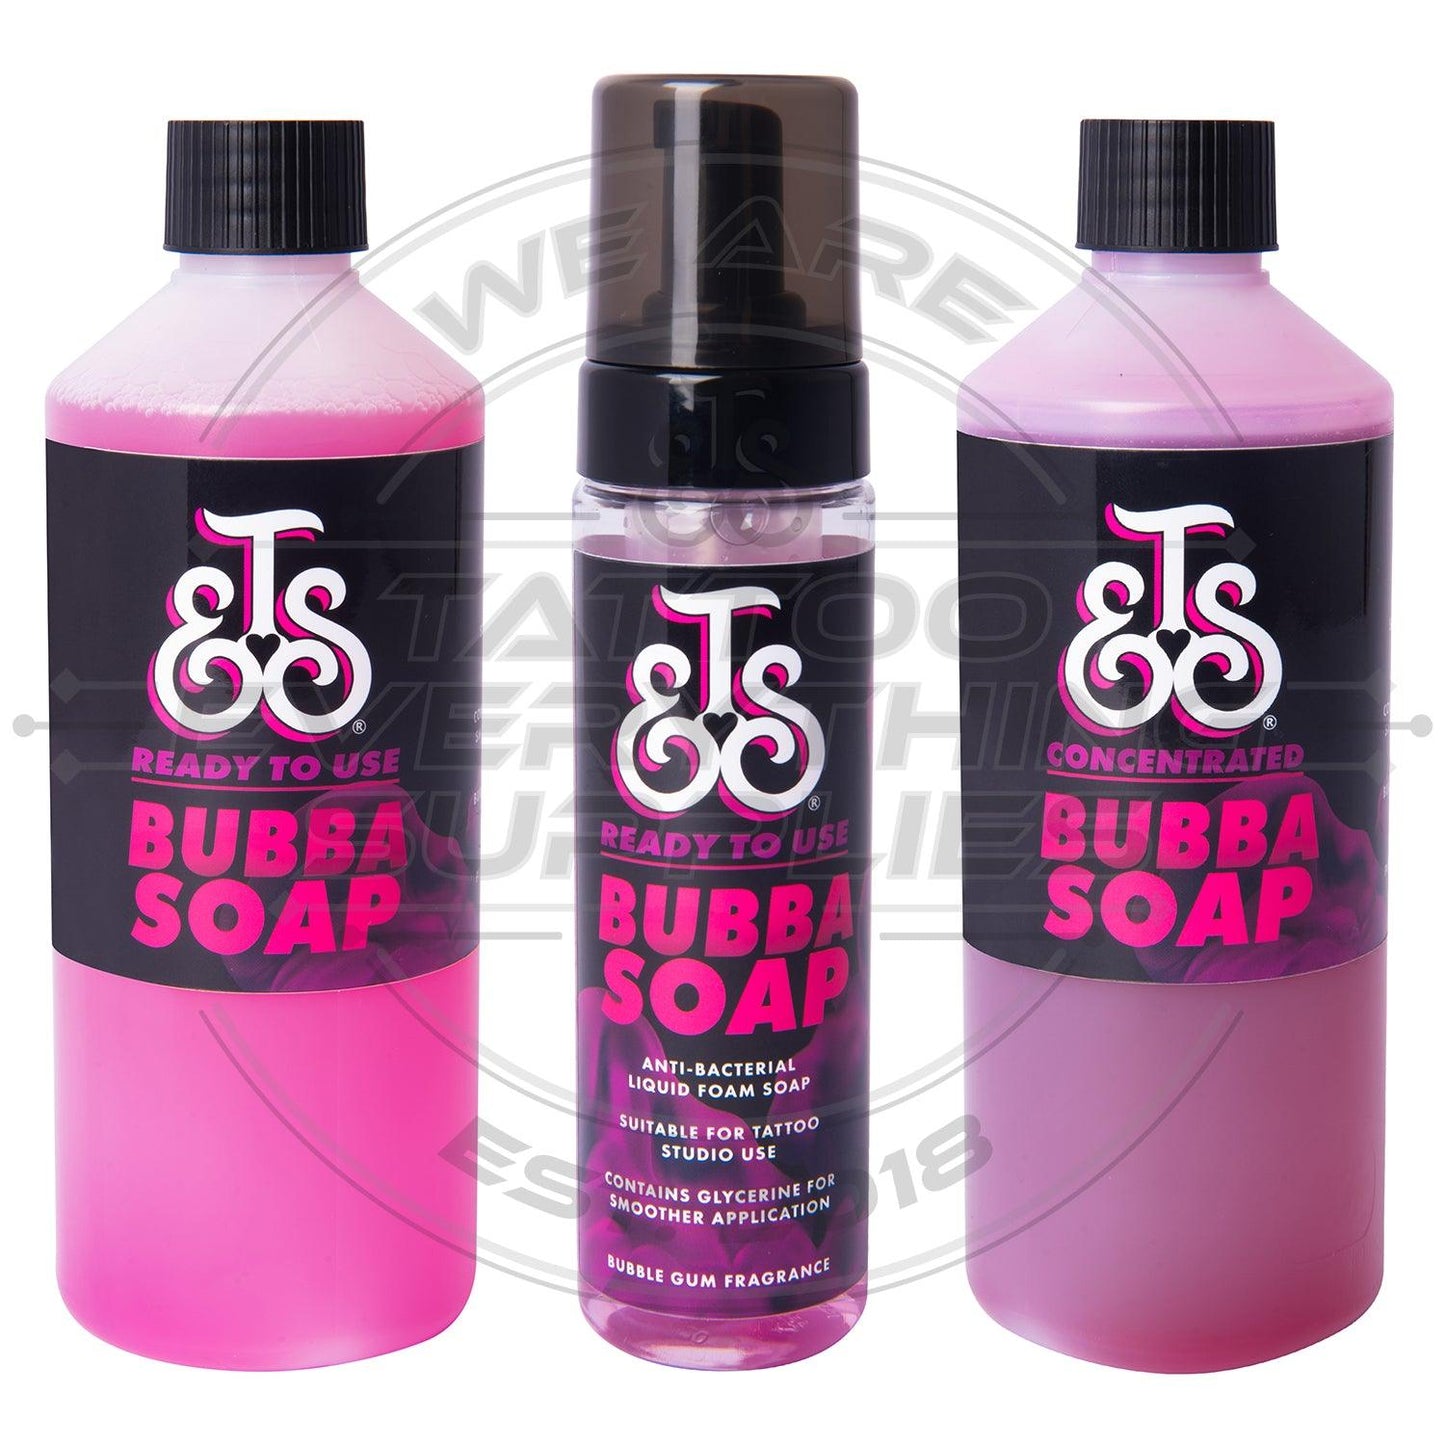 Anti-bacterial BubbaGum Soap